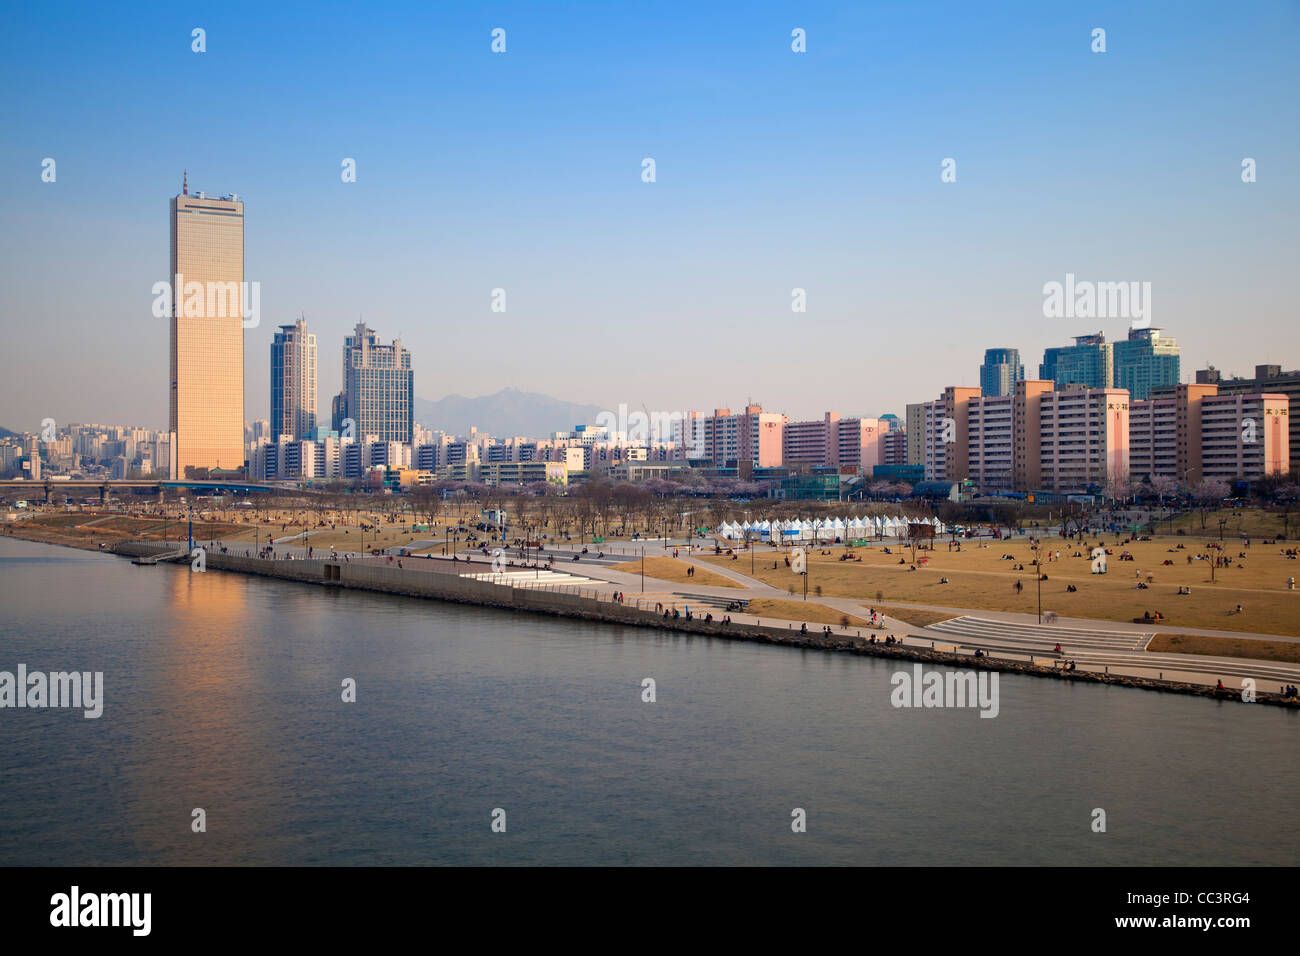 Korea, Seoul, Yeouido, 63 Gebäude - eines der berühmtesten Sehenswürdigkeiten Seouls, an den Ufern des Flusses Hangang Stockfoto